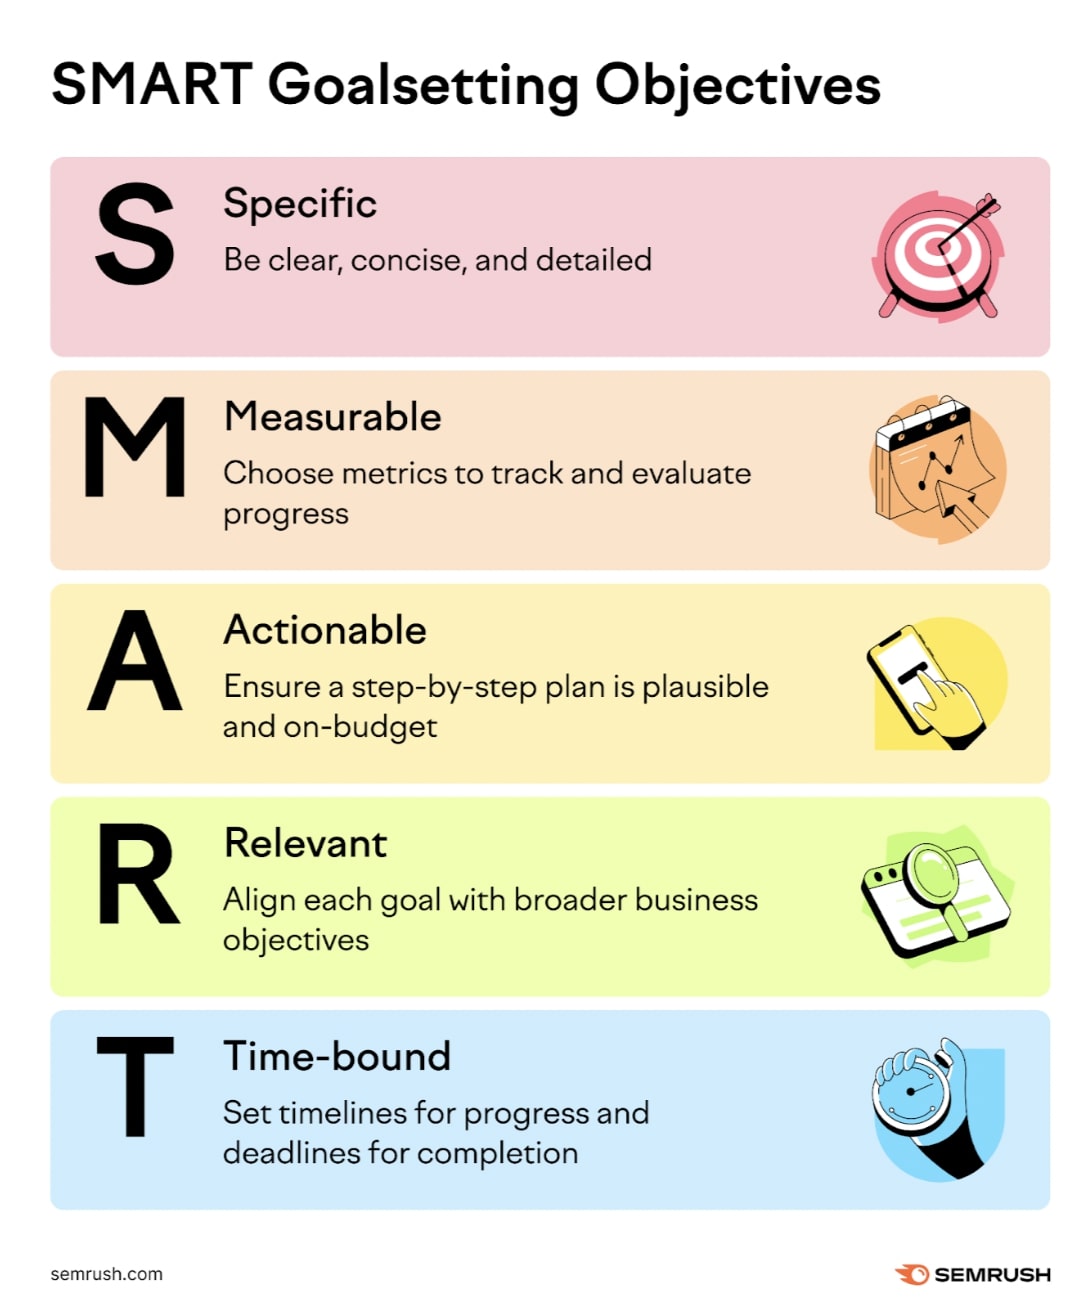 SMART goalsetting objectives explained